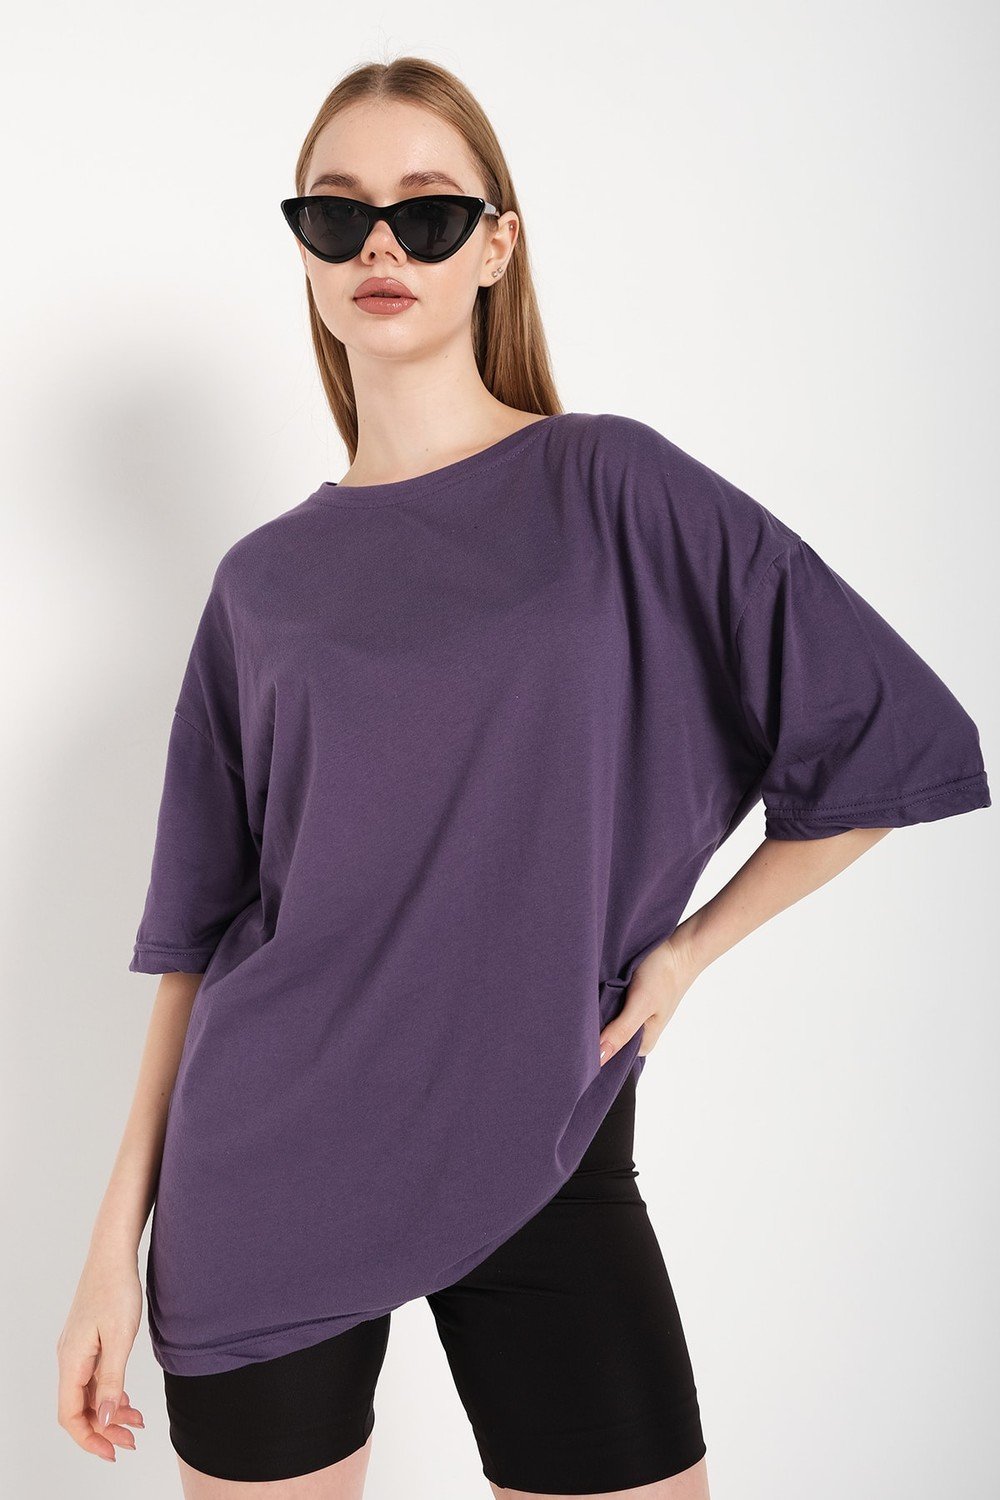 K&H TWENTY-ONE Women's Purple Oversized T-shirt